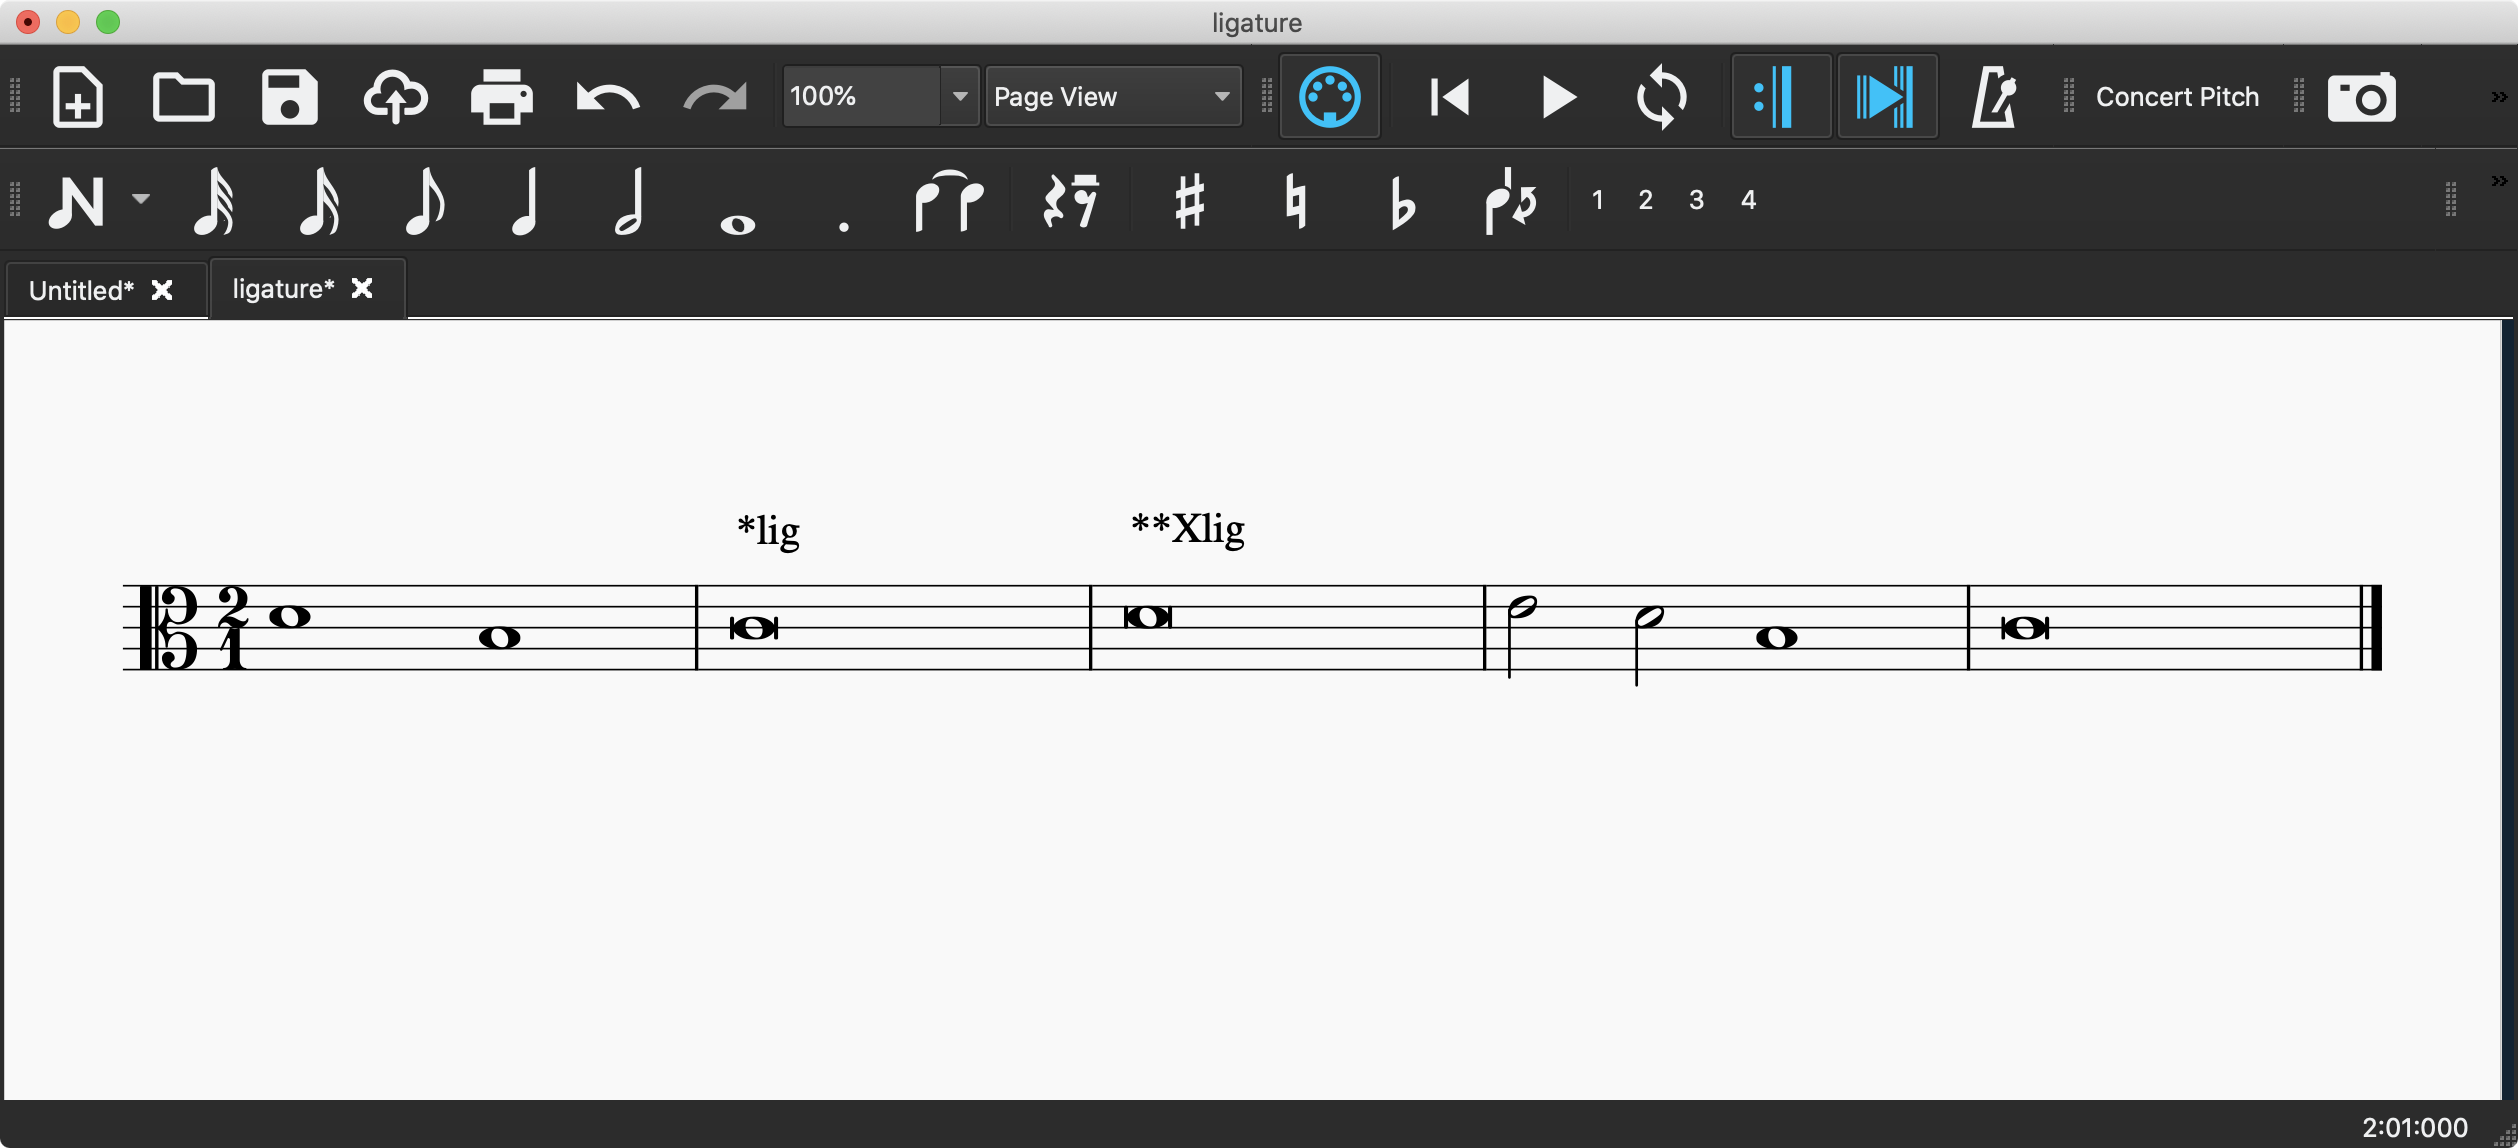 Adding ligature interpretations in MuseScore